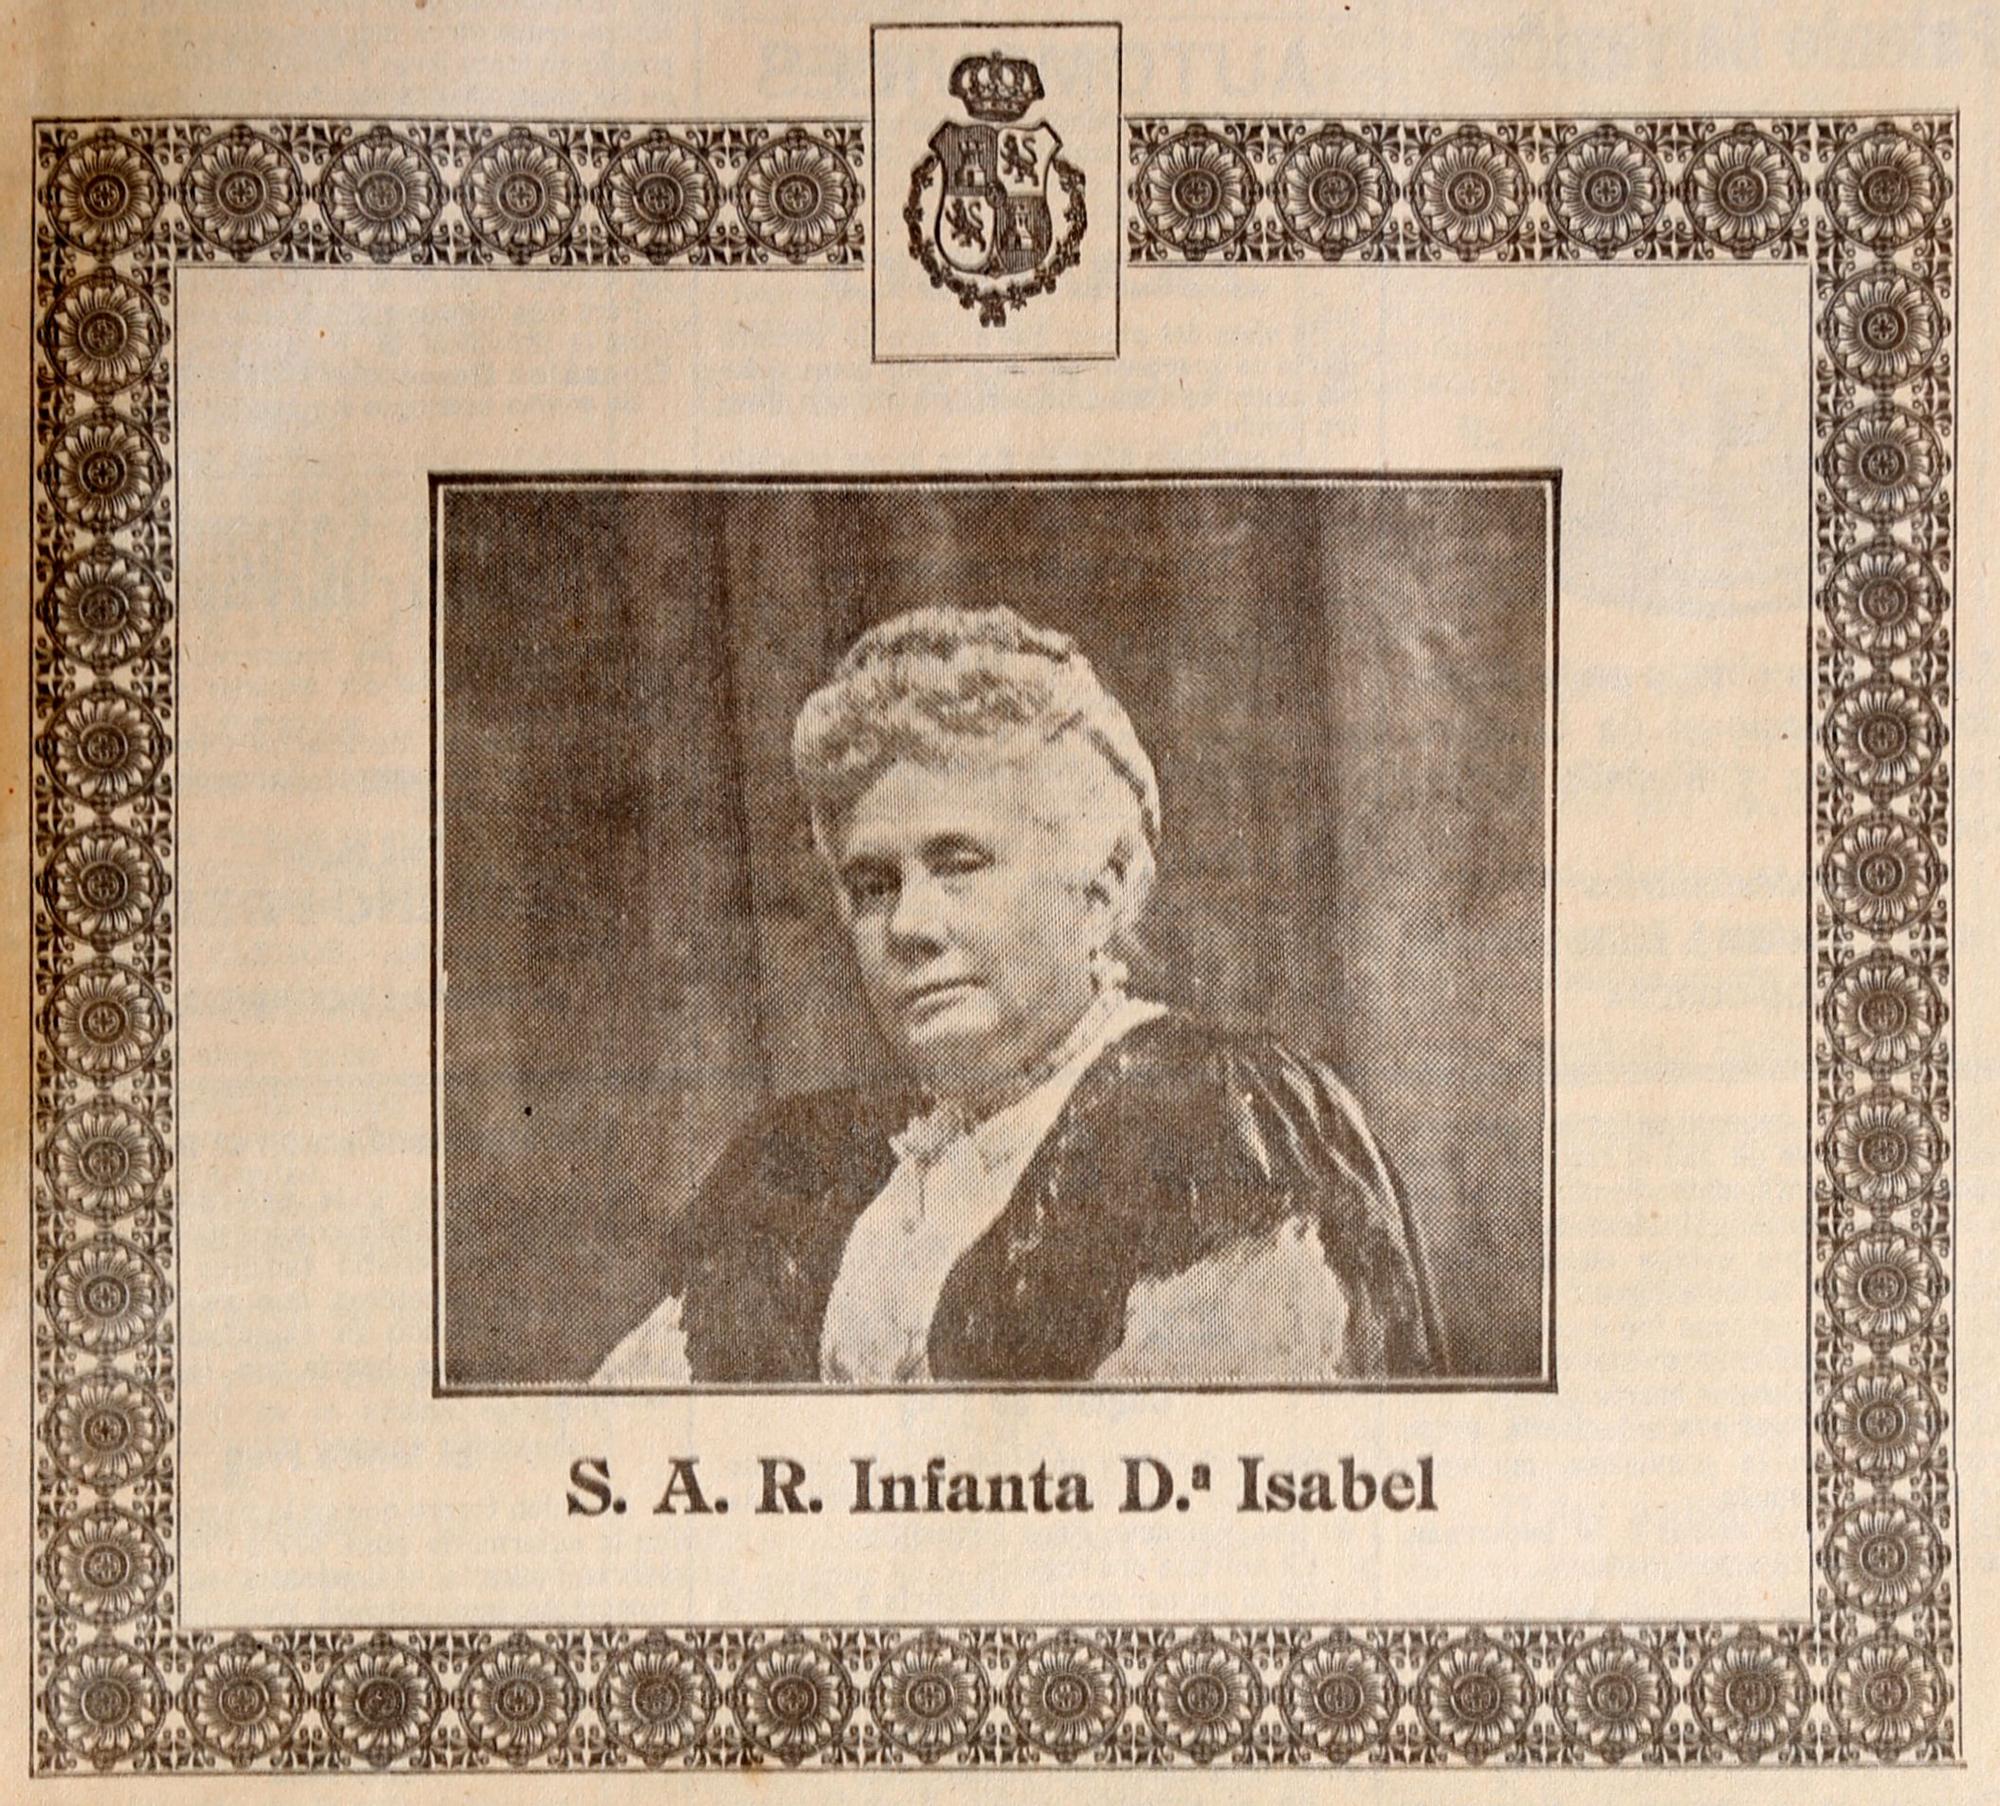 Infanta Isabel “A Chata” - Irmá de Alfonso XII (1906)